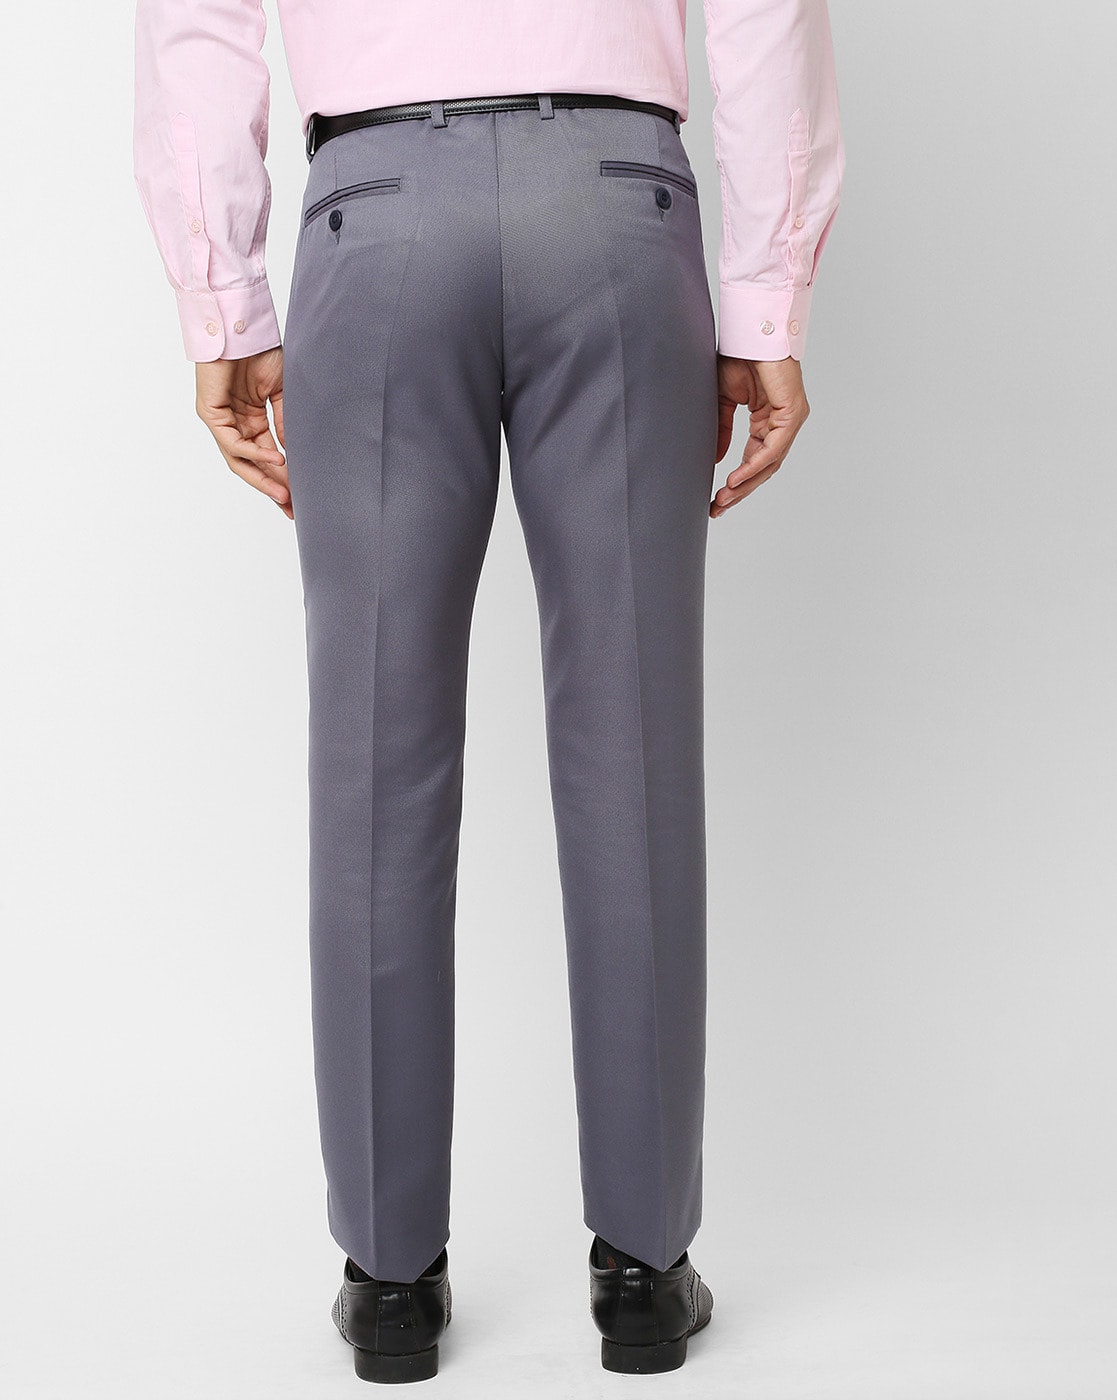 Essential Grey Suit Pant  RWCO